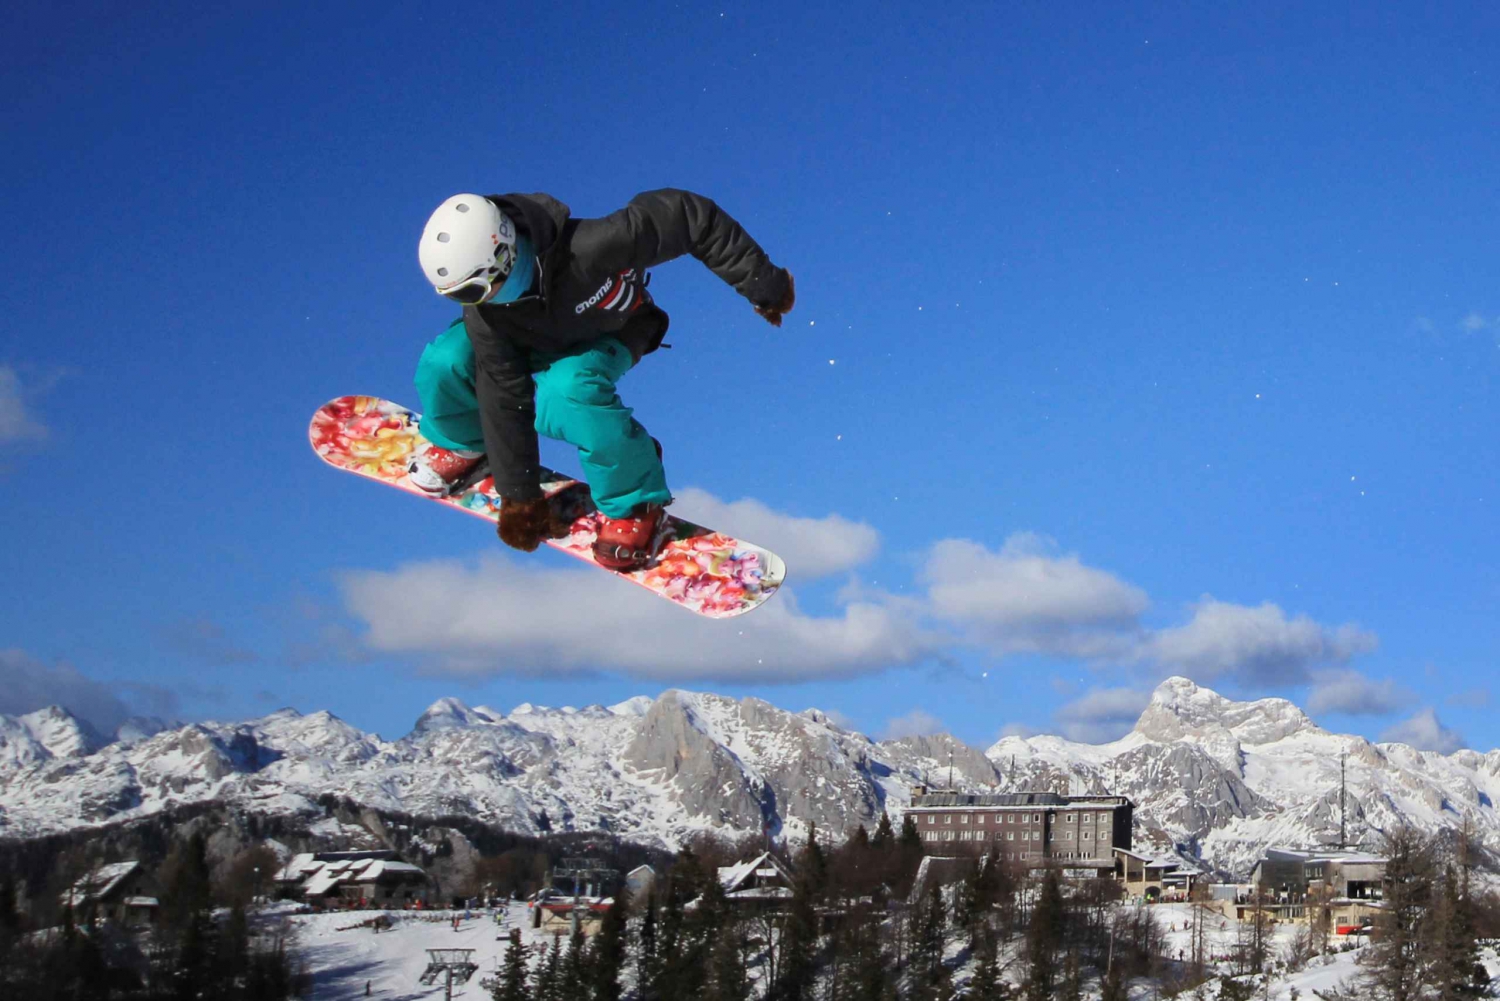 Half-Day Snowboarding with Instructor in Vogel Ski Center